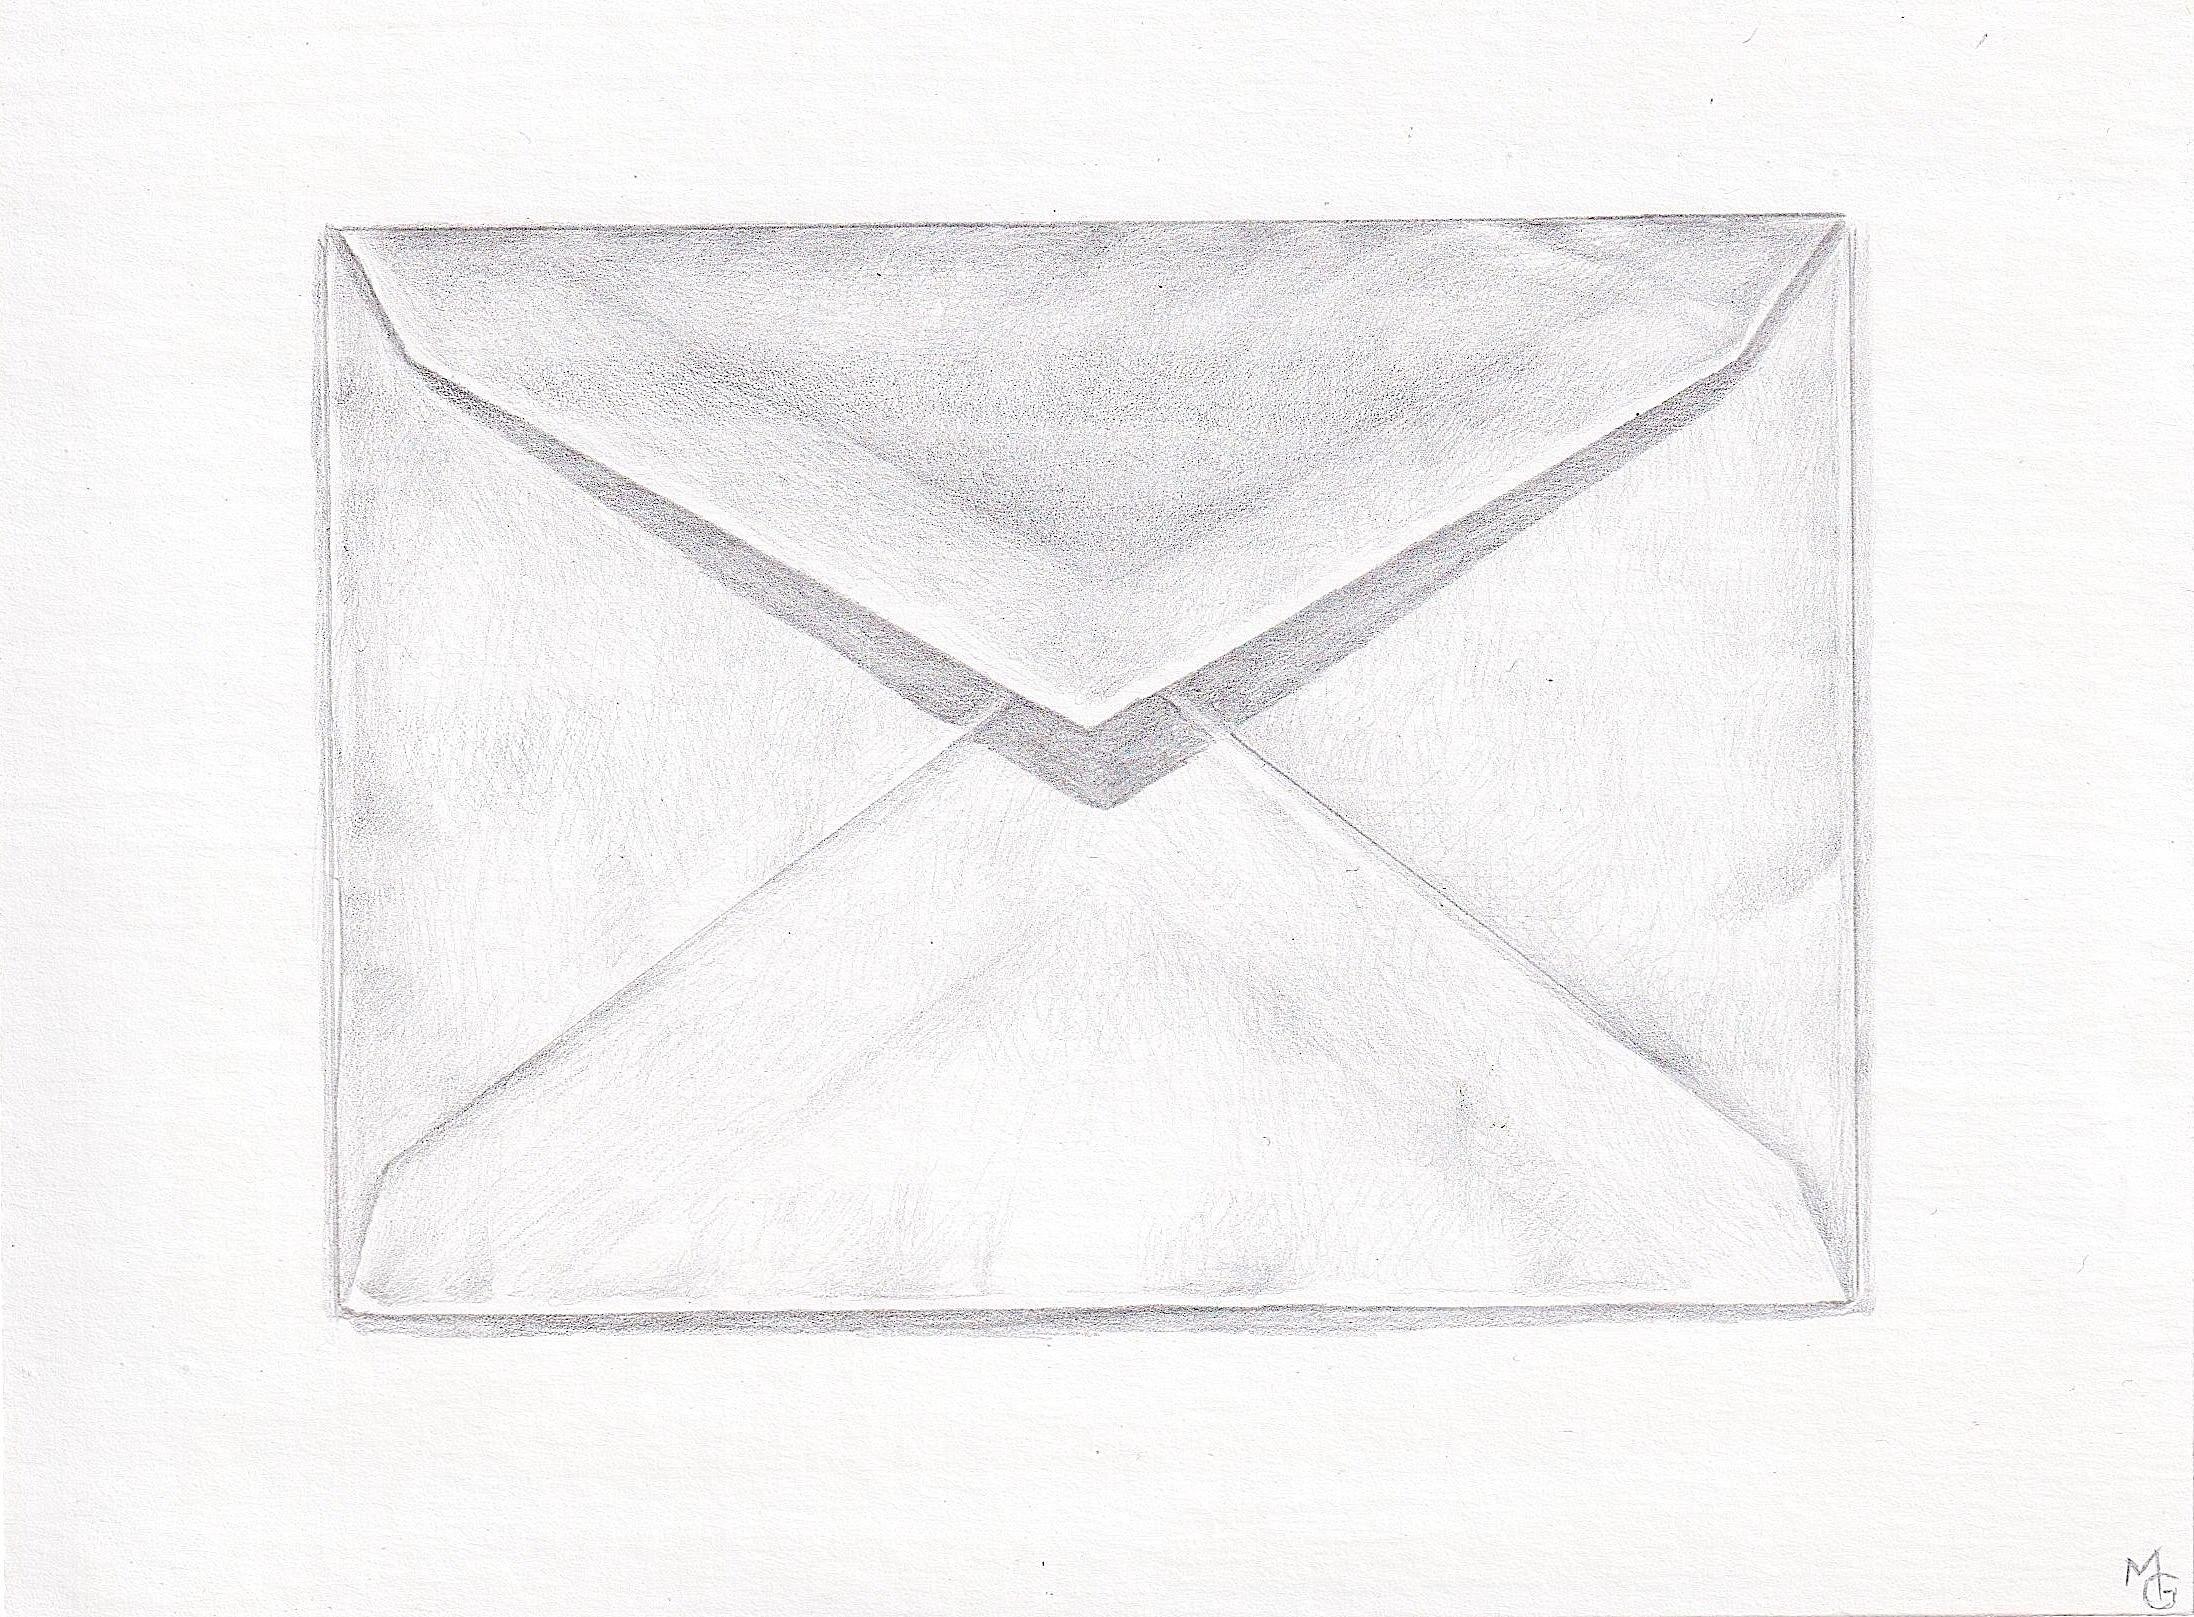 Margot Glass Still-Life - Envelope #1, contemporary realist silverpoint still life drawing